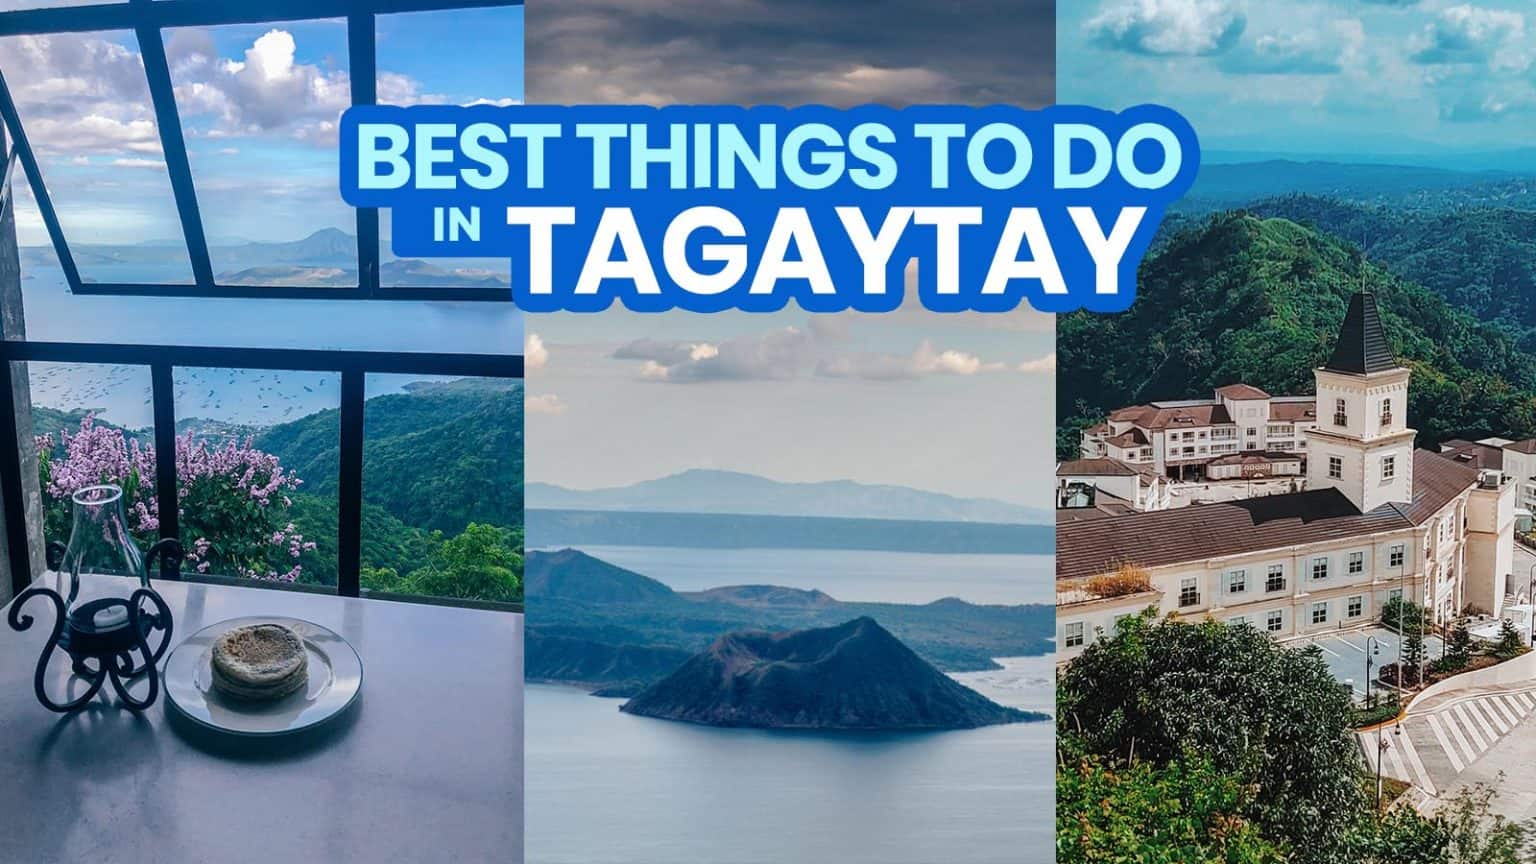 tagaytay tourist spots entrance fee